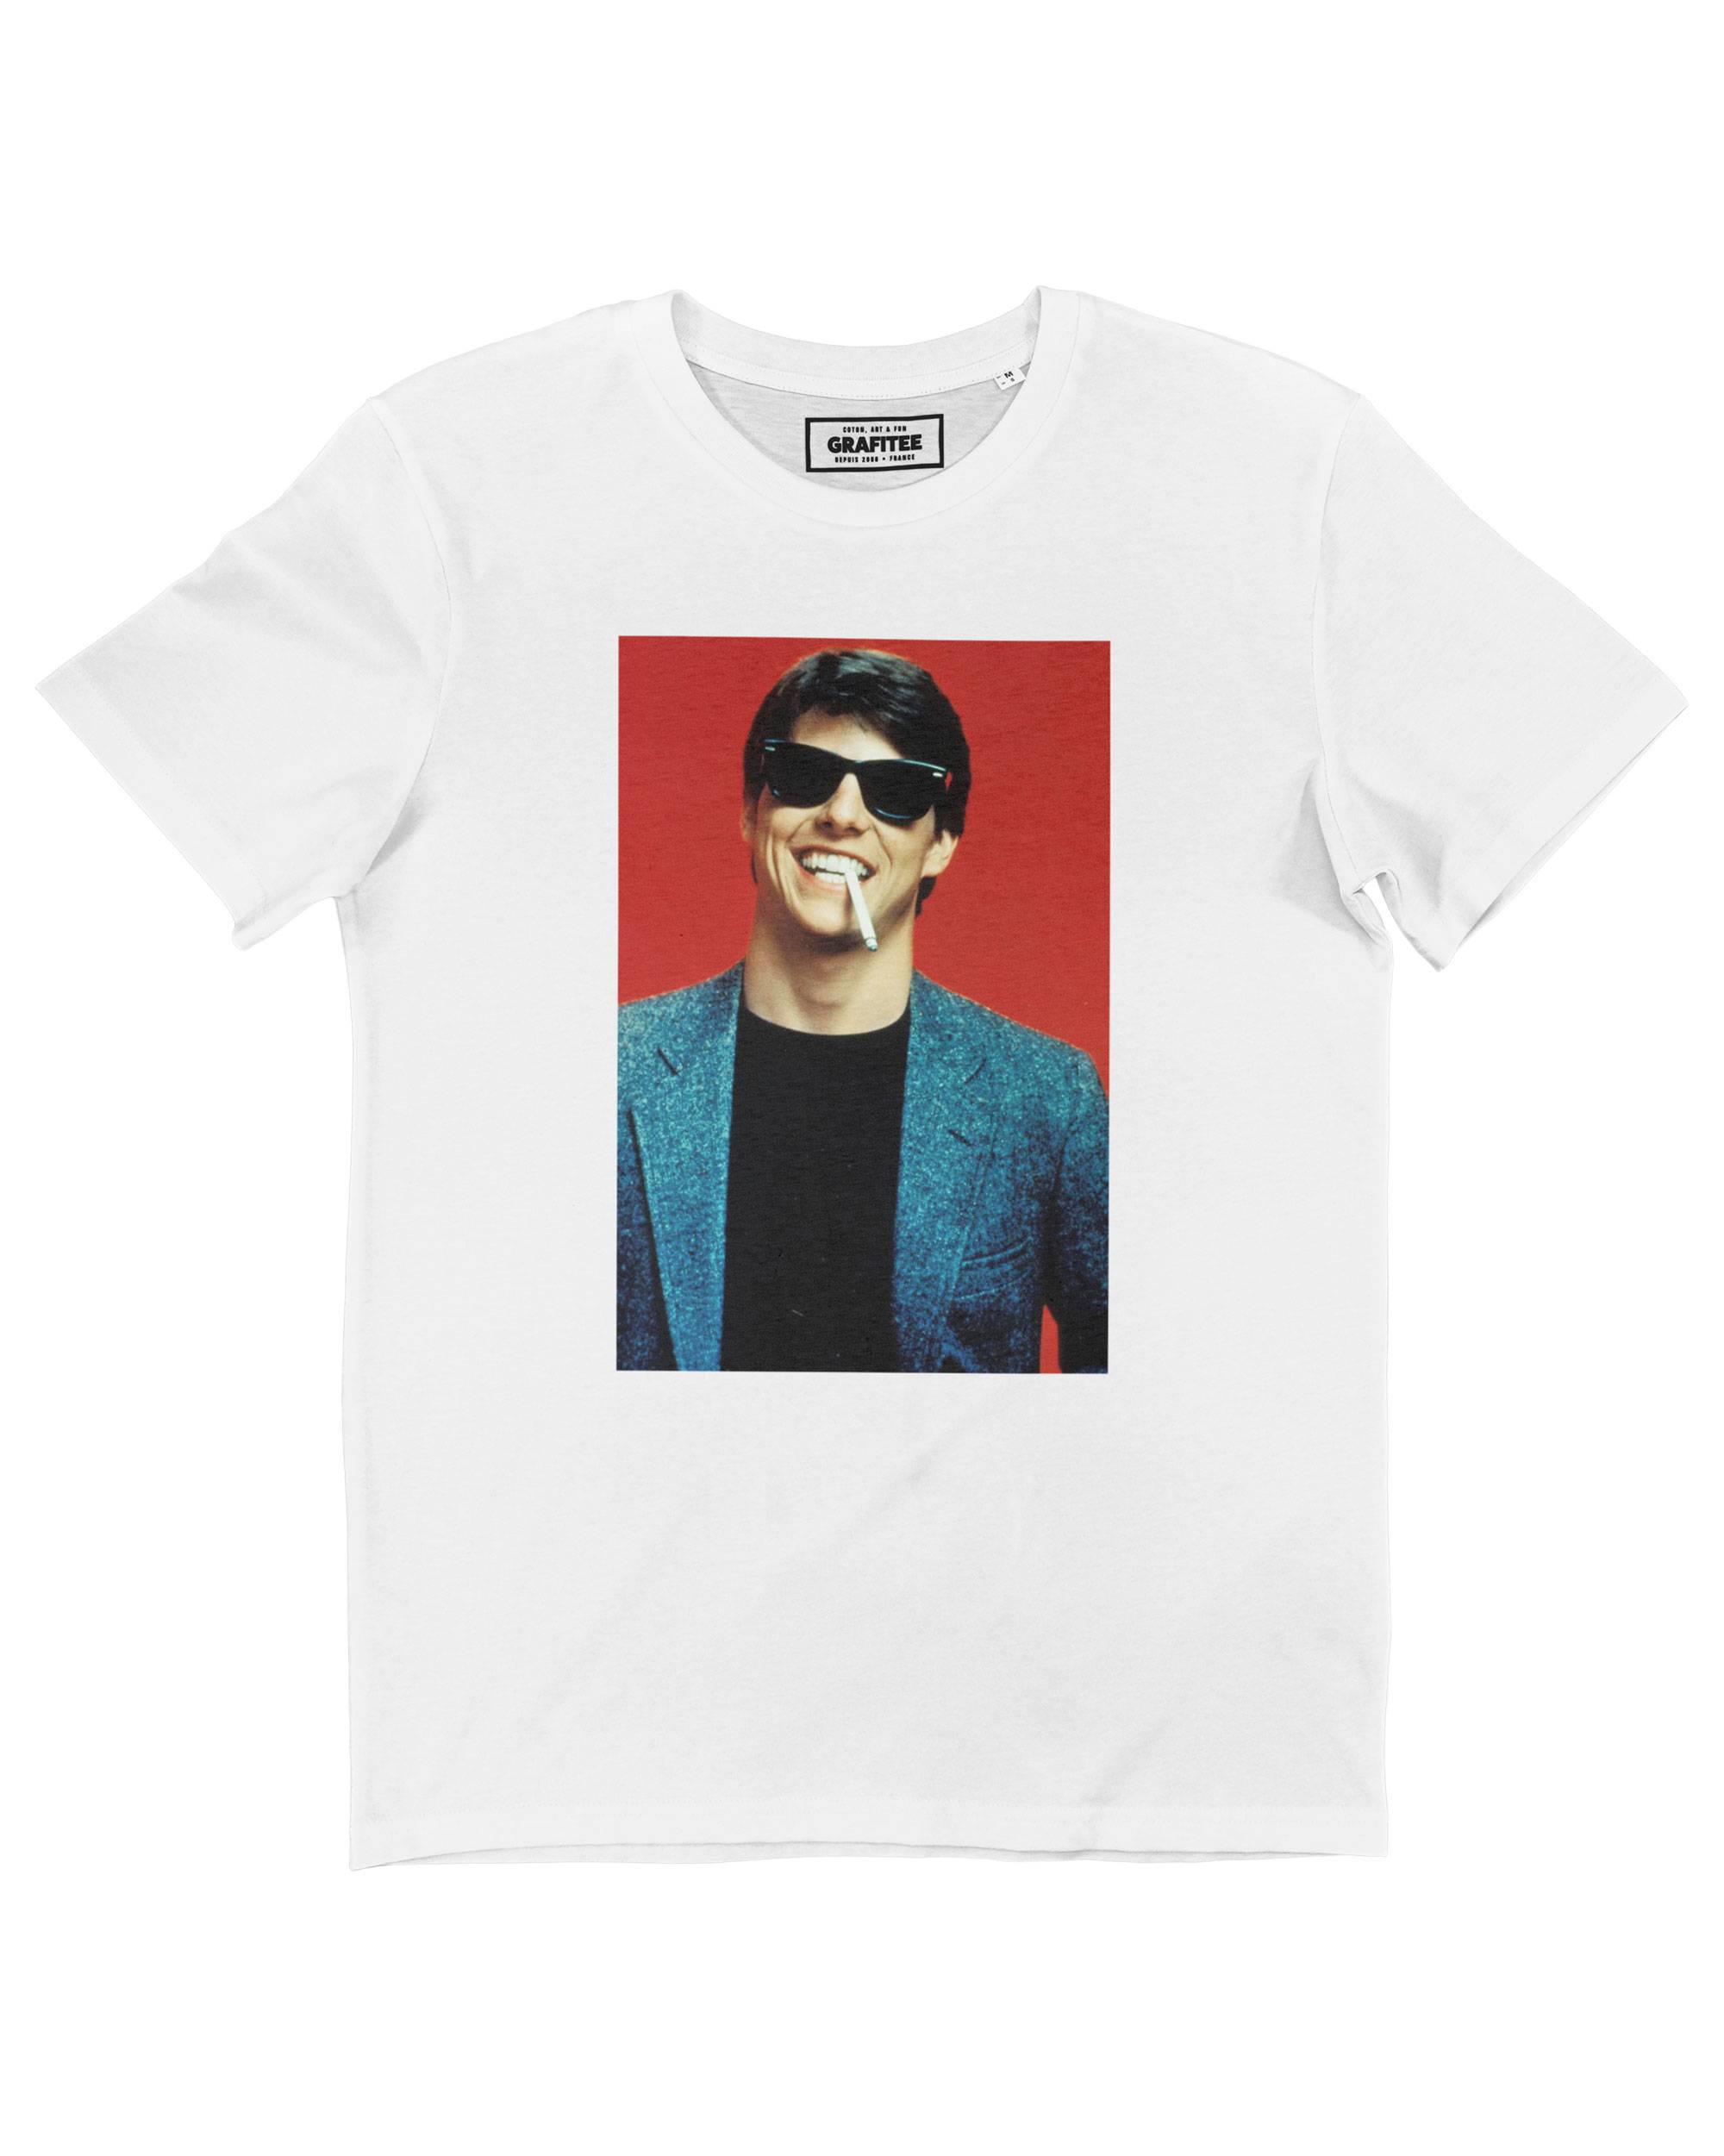 T-shirt Tom Cruise Super Star Grafitee